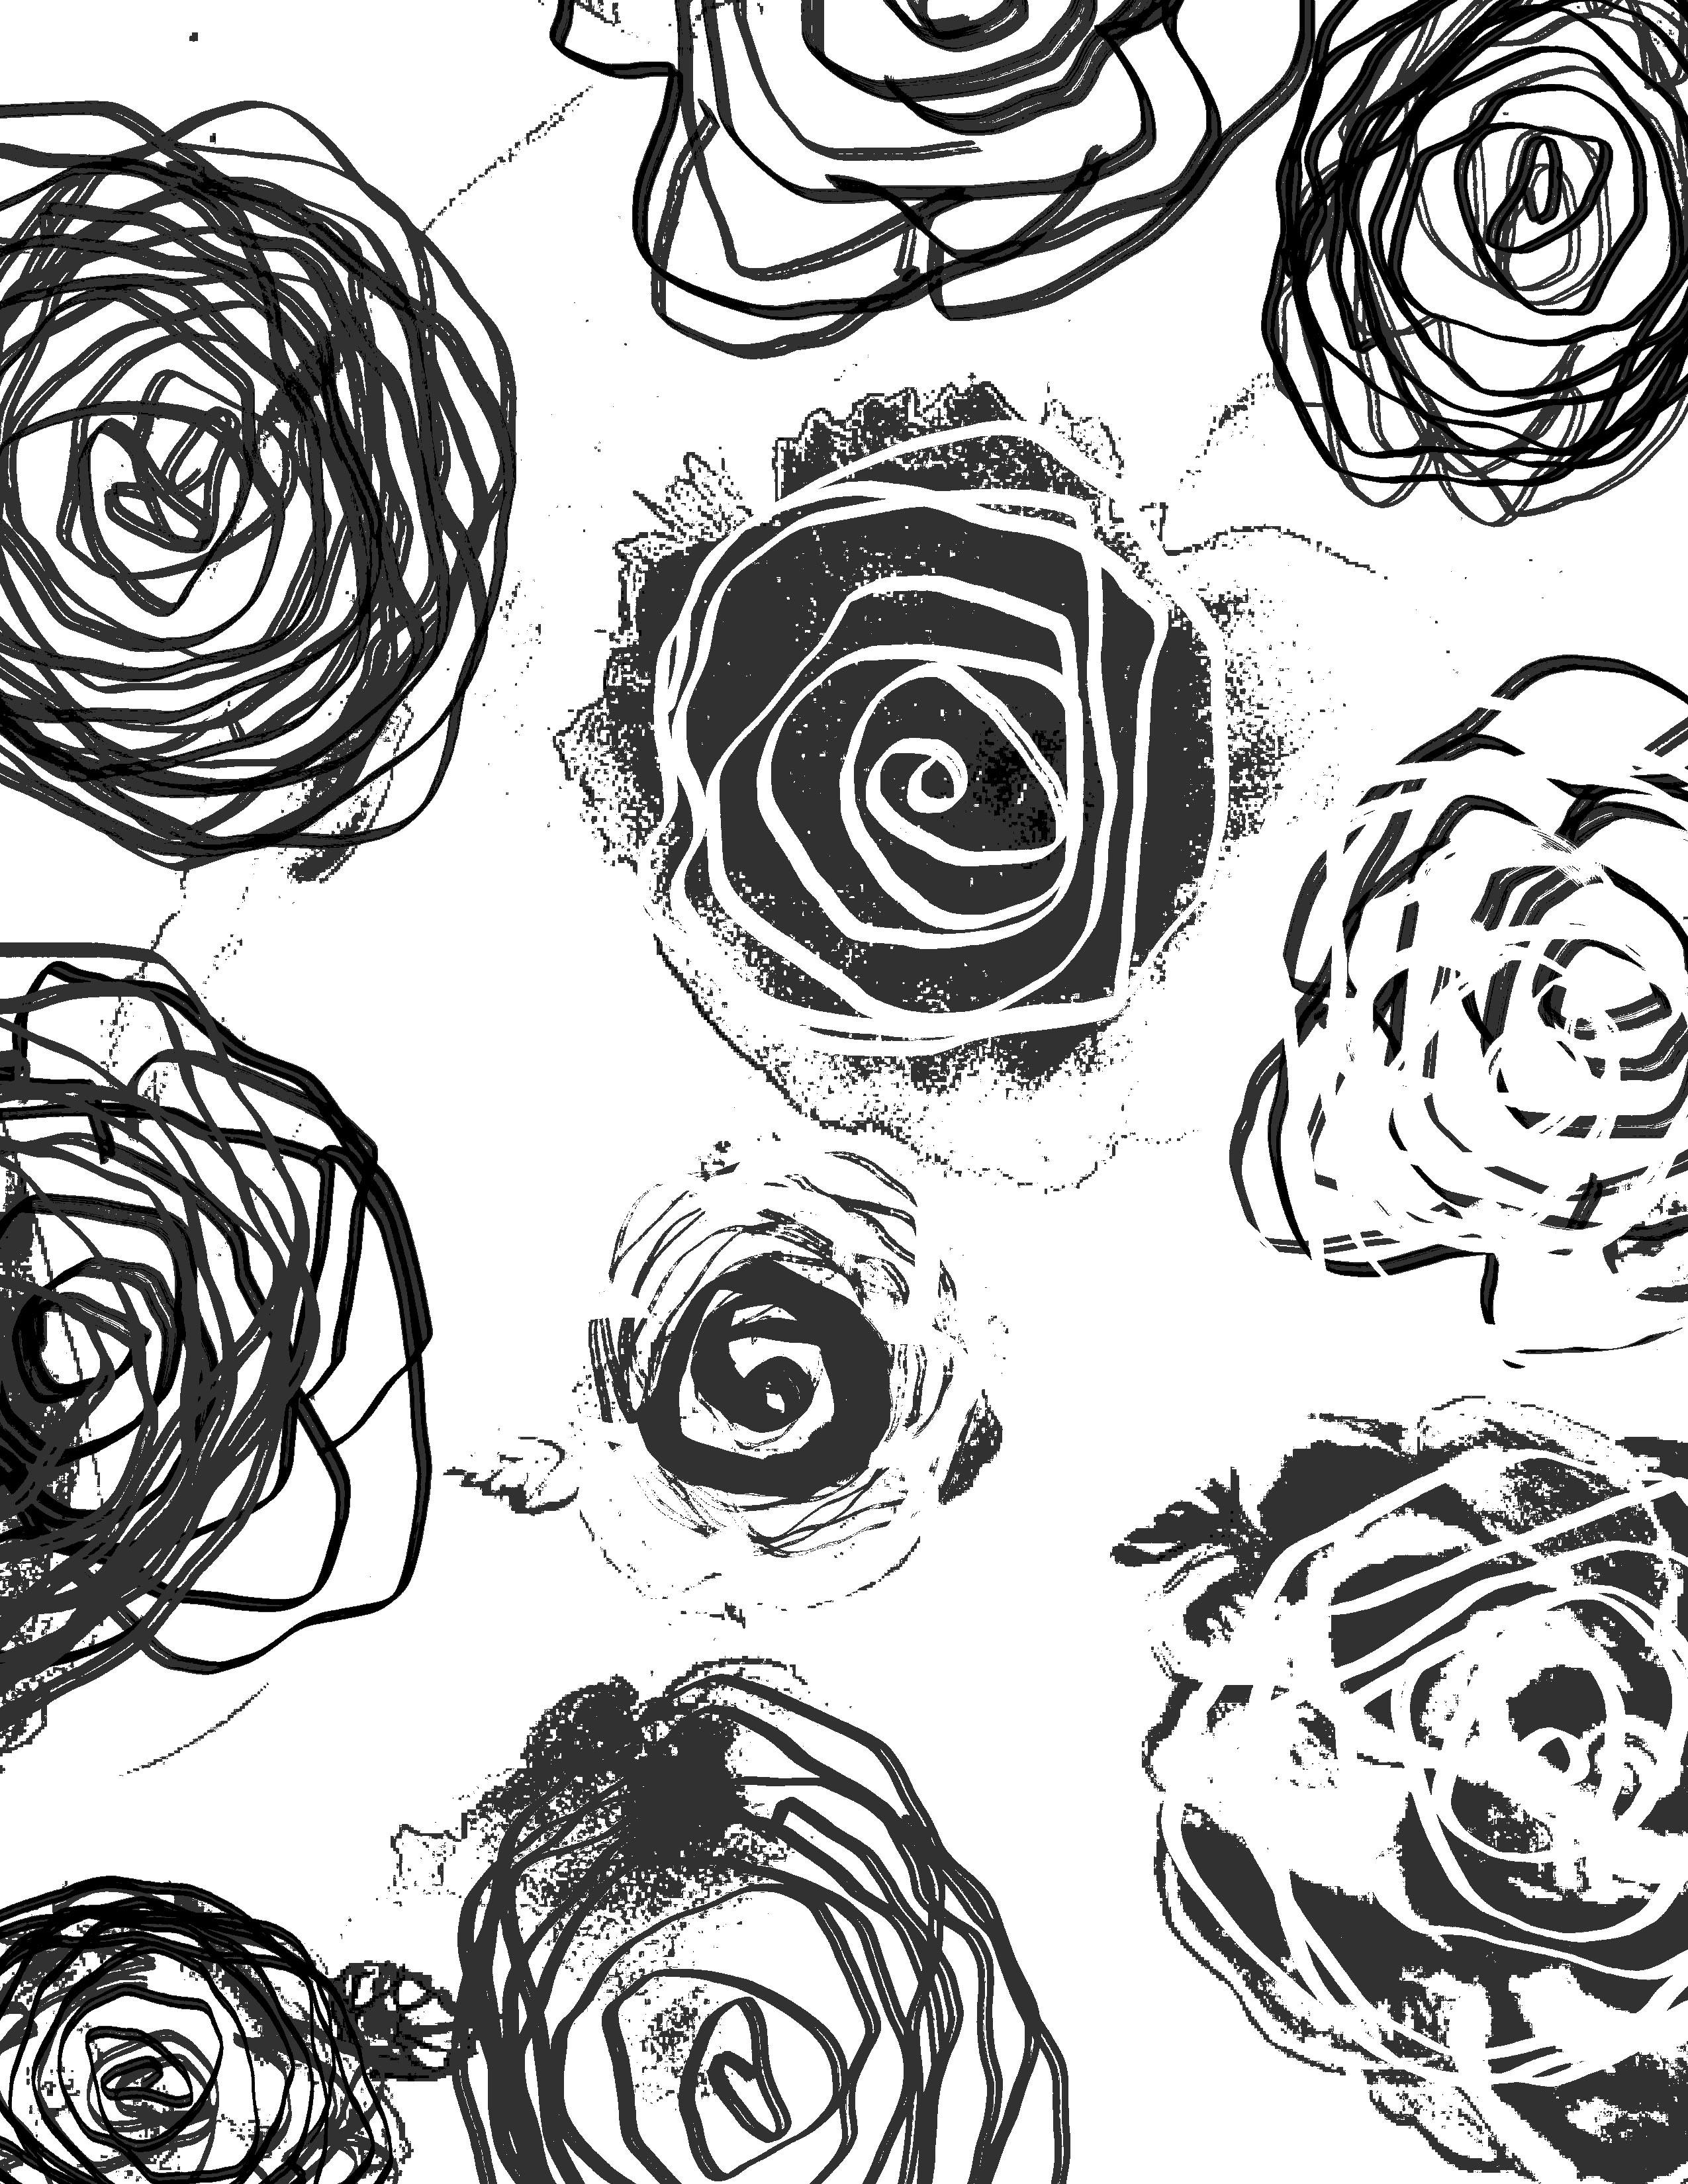 Free stock photo of black and white, brushes, roses